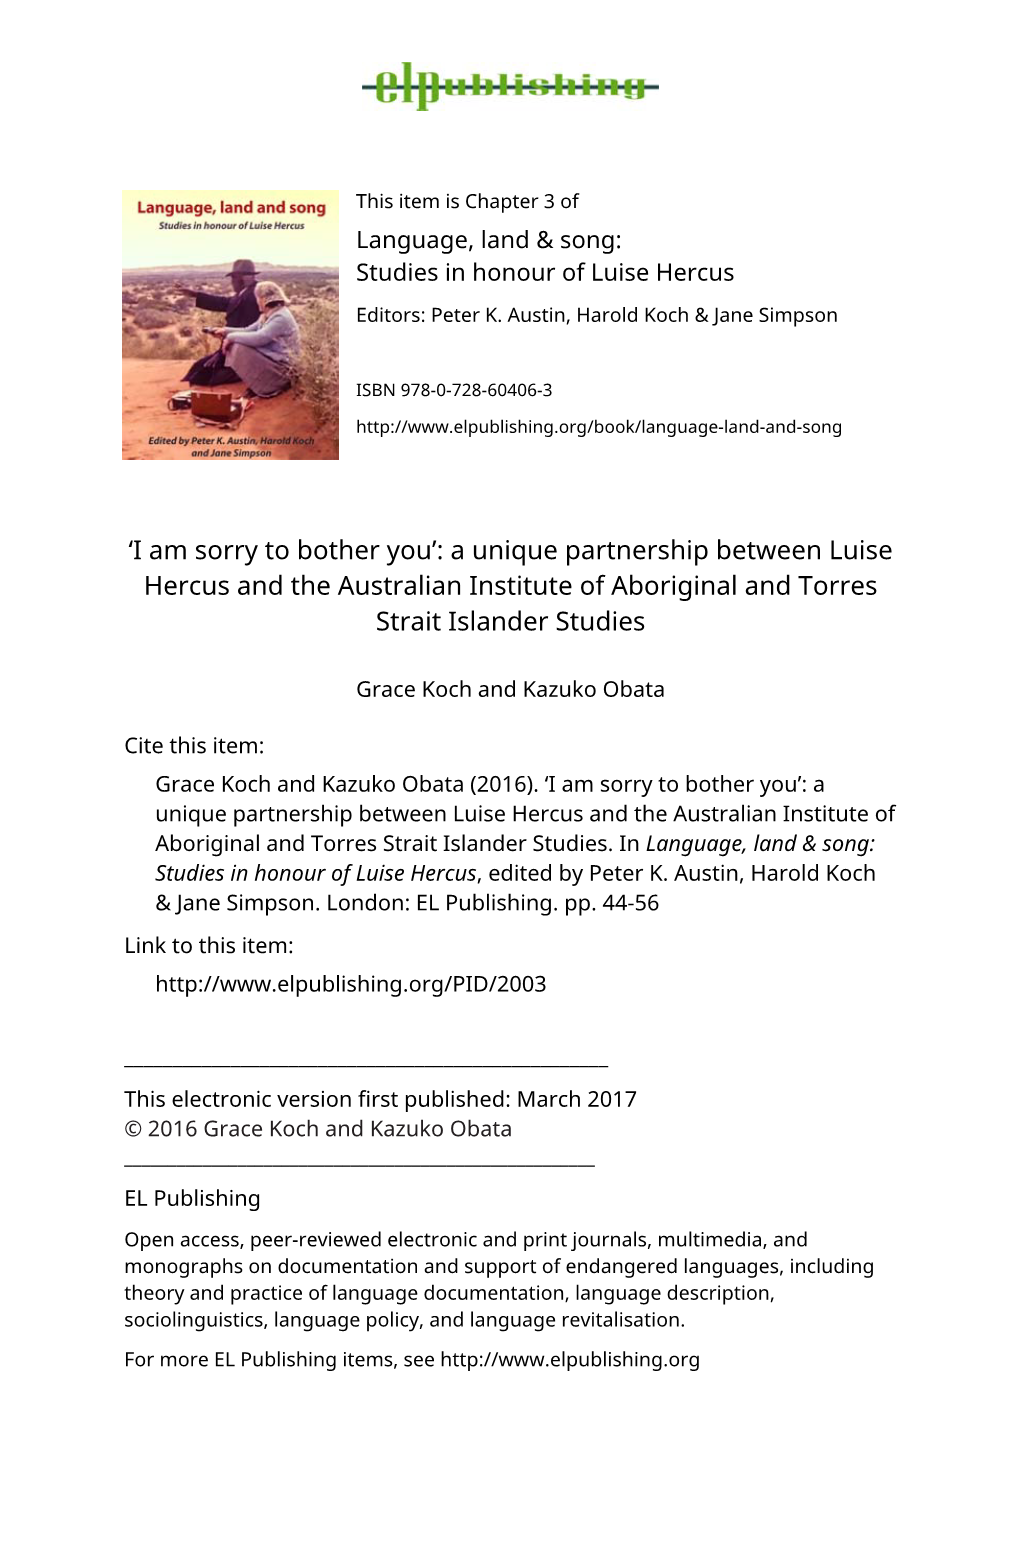 A Unique Partnership Between Luise Hercus and the Australian Institute of Aboriginal and Torres Strait Islander Studies